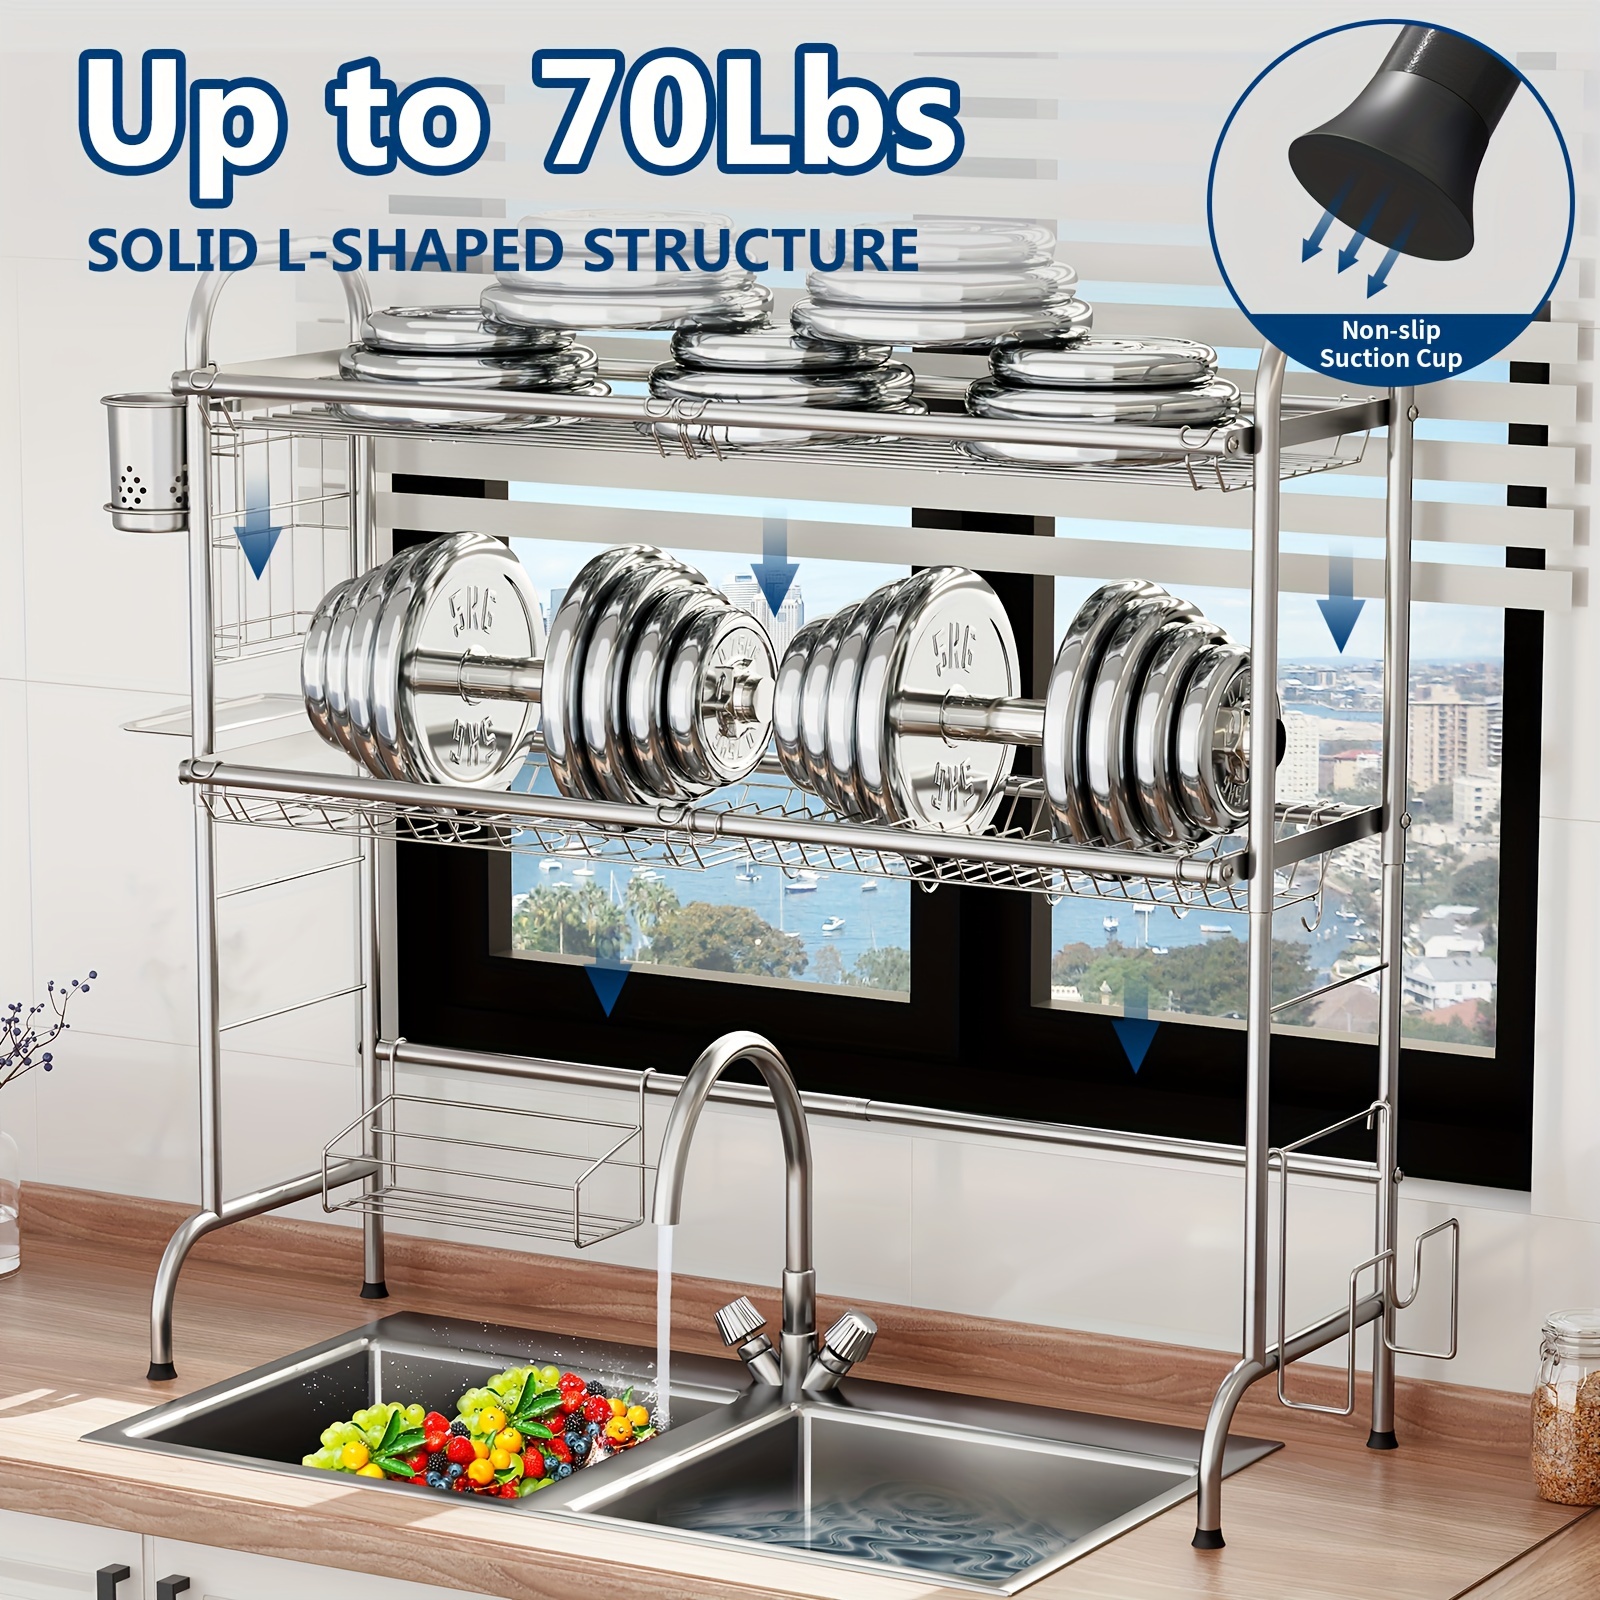 2-Tier over the Sink Dish Drying Rack, Nonslip Height Adjustable